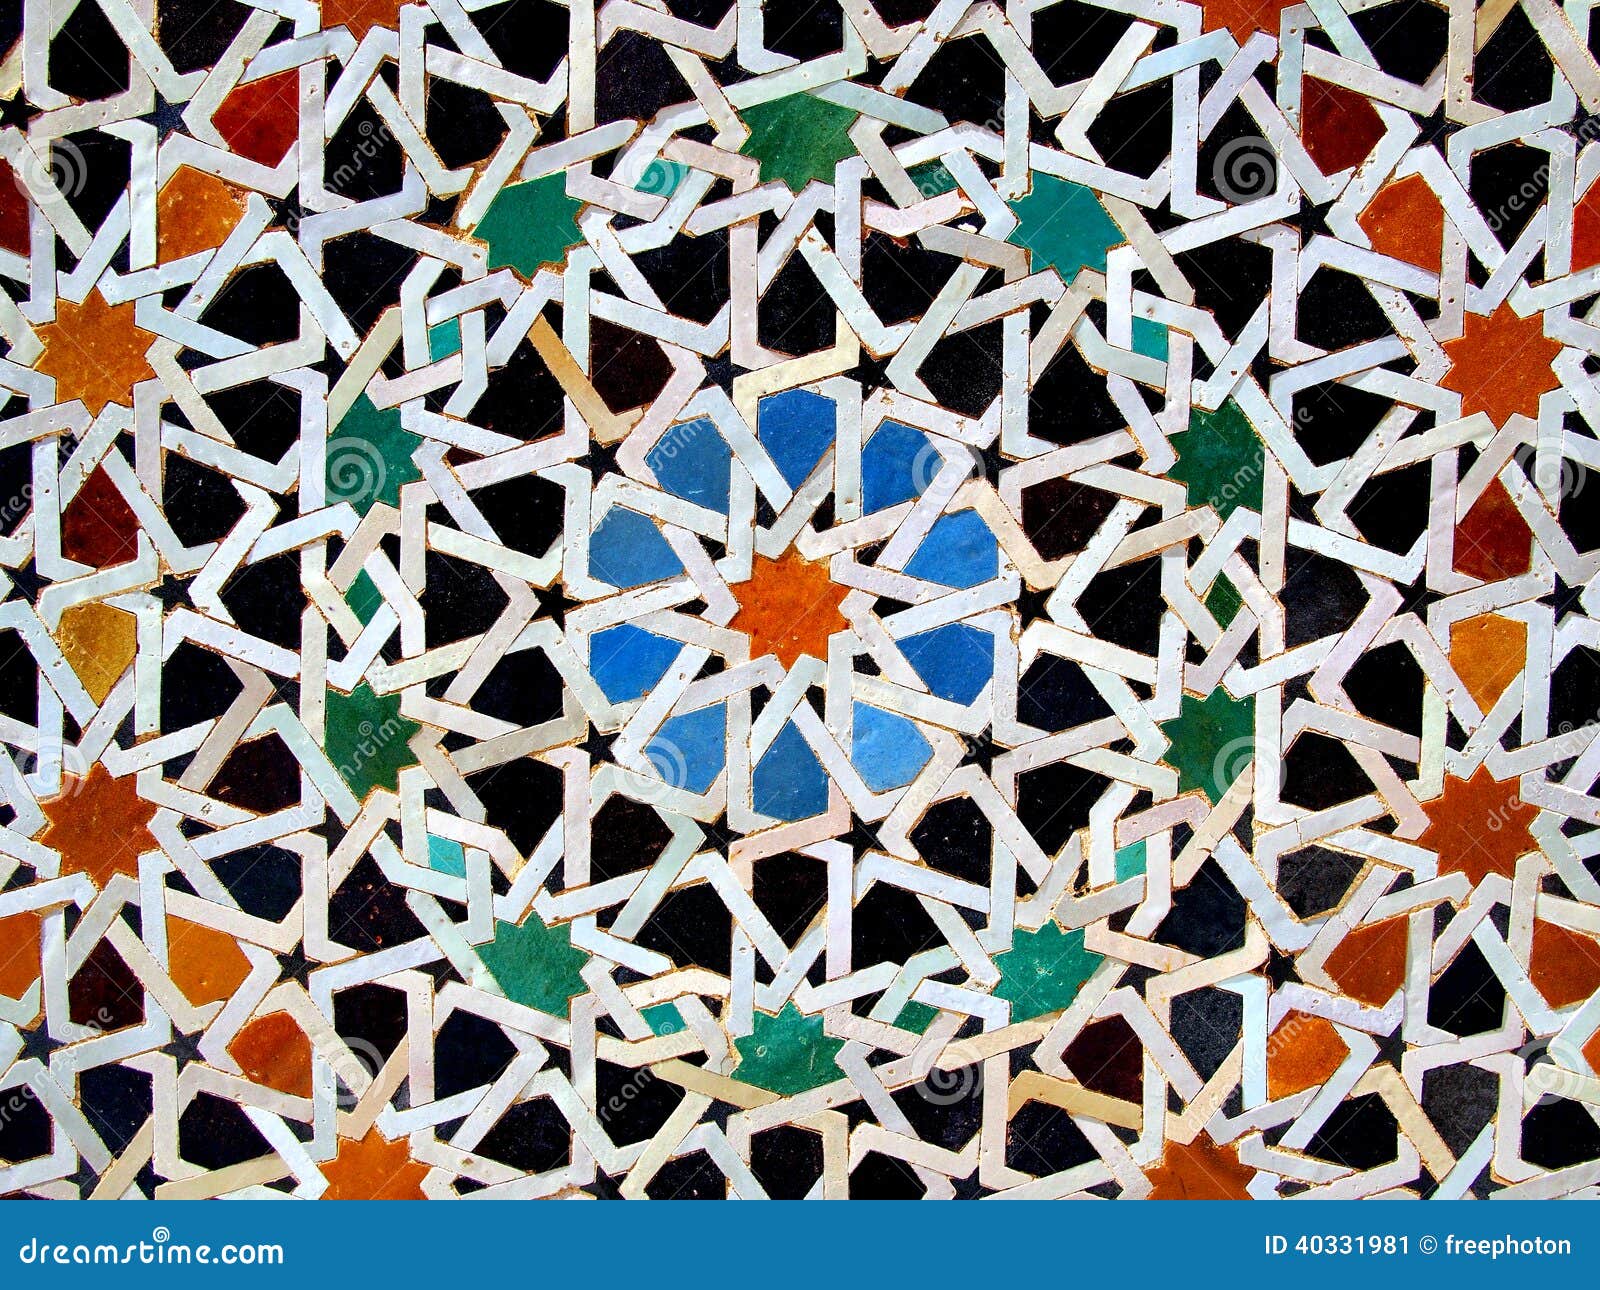 zellige, moroccan mosaic tiles